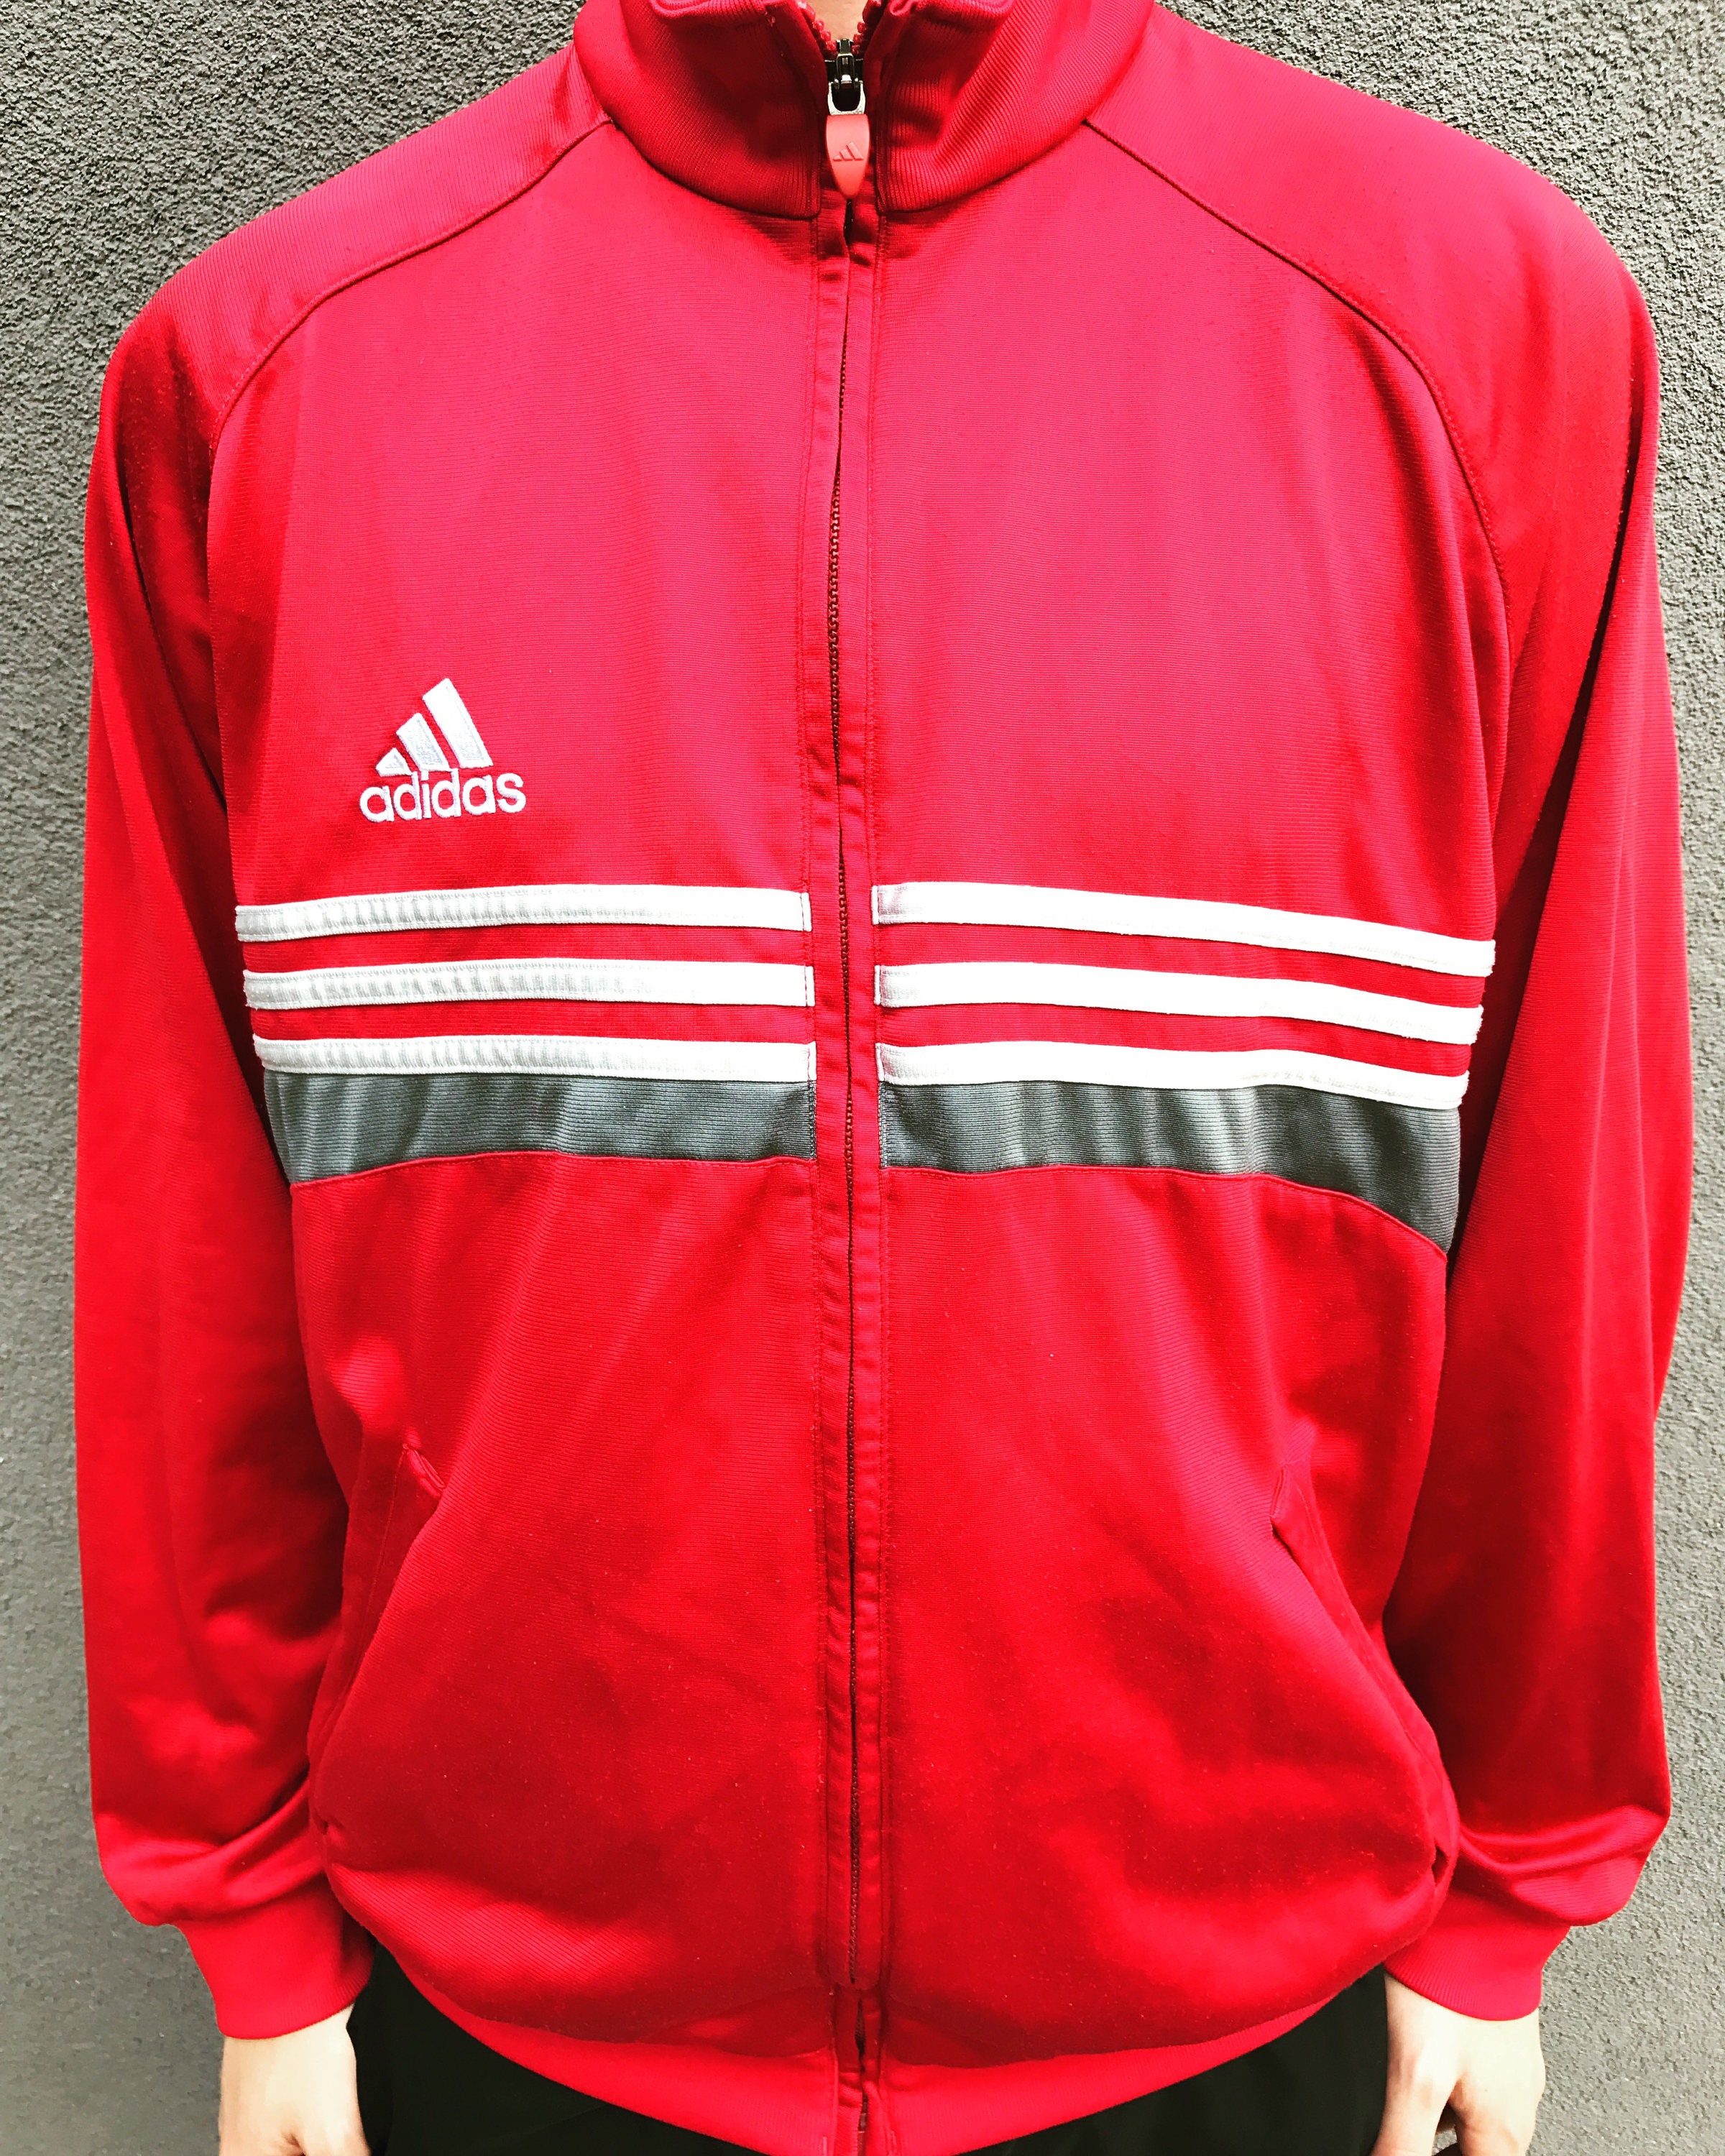 Adidas Sweatshirt / Jacket / L Large / Red / Maroon - Etsy